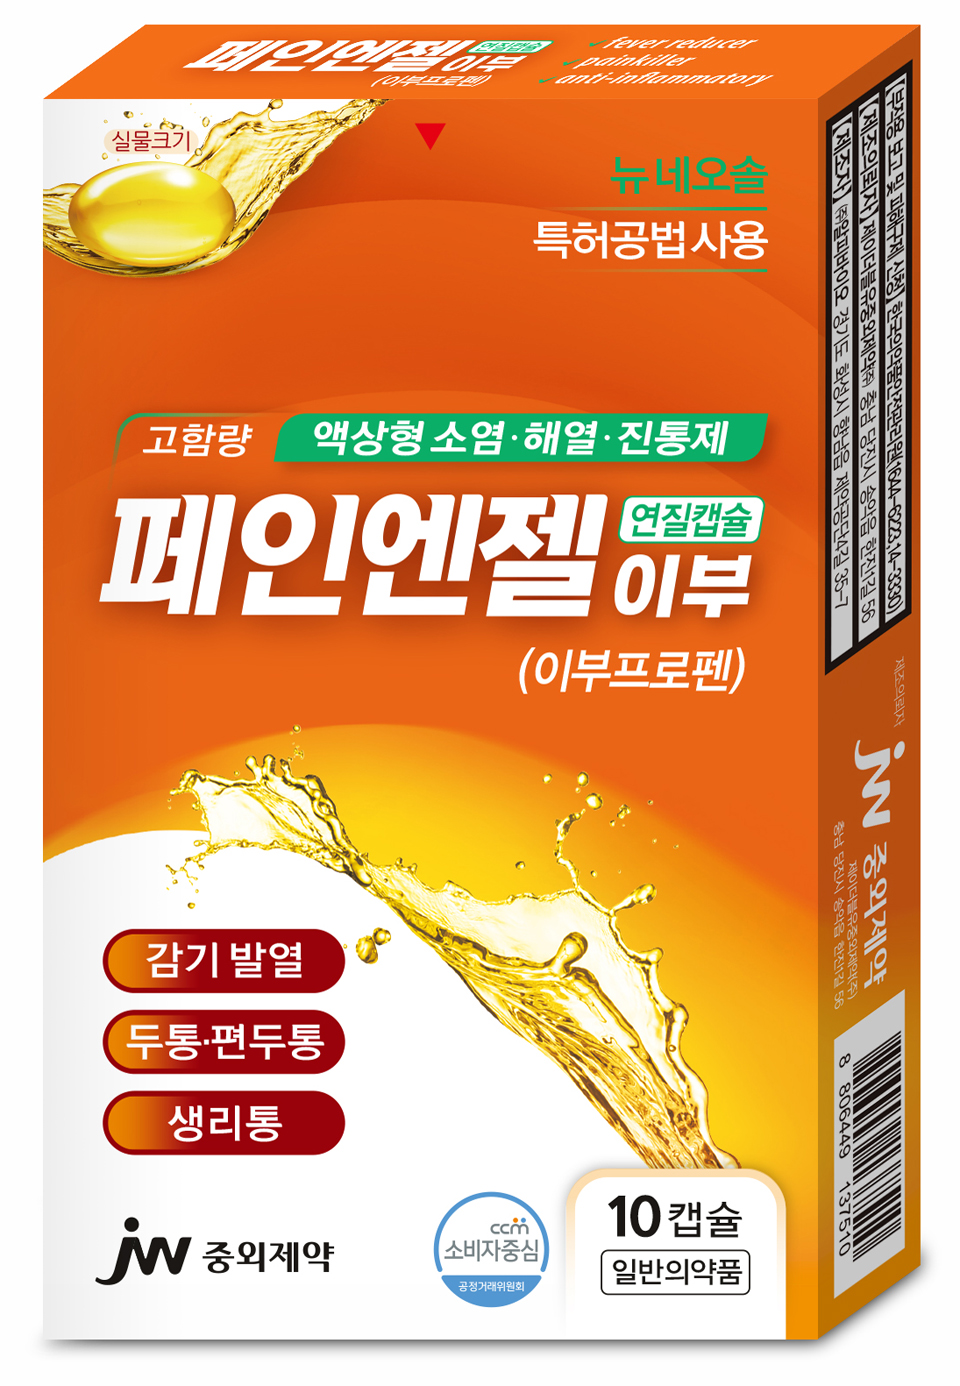 JW중외제약 ‘페인엔젤 이부’ 리뉴얼 제품 [사진=JW중외제약 제공]